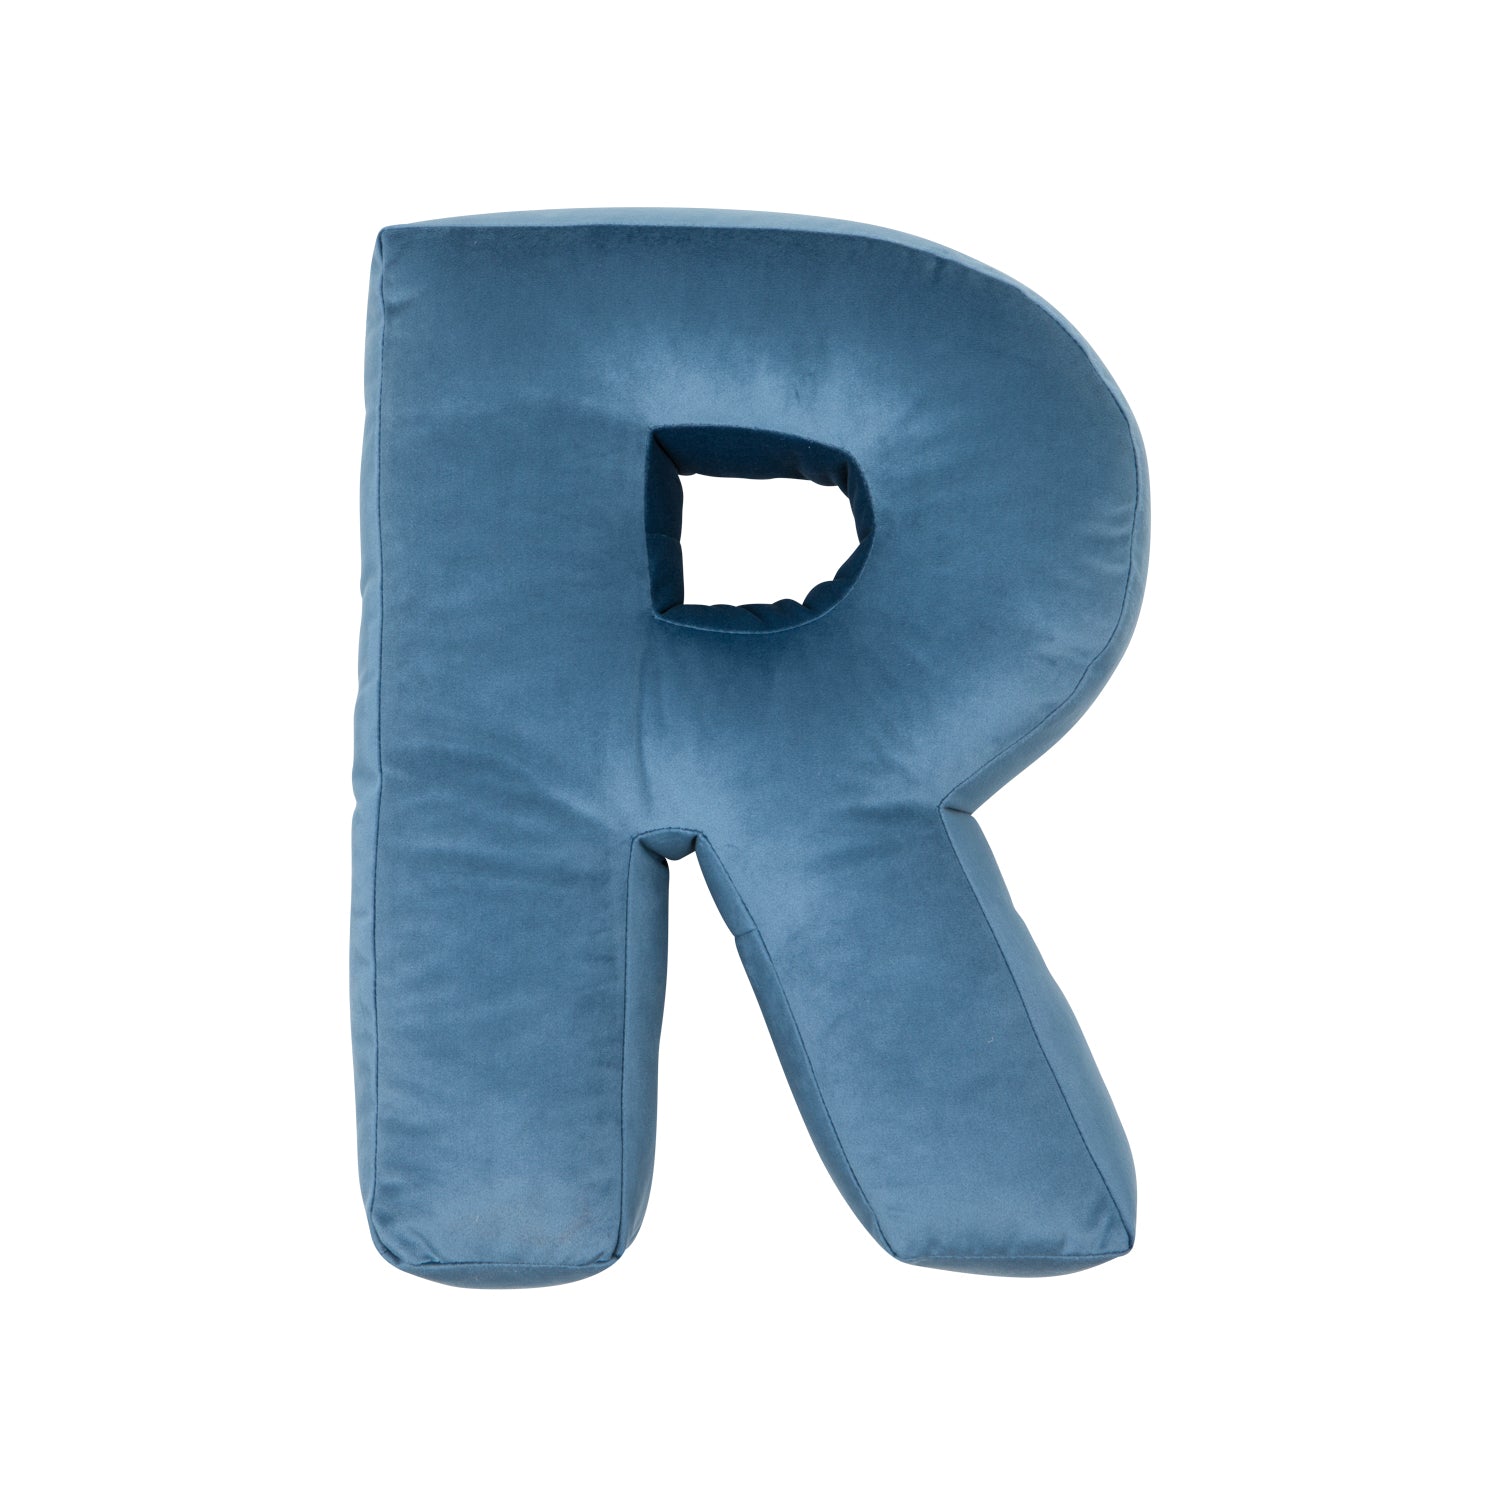 Poduszka literka welurowa R niebieska od Bettys Home